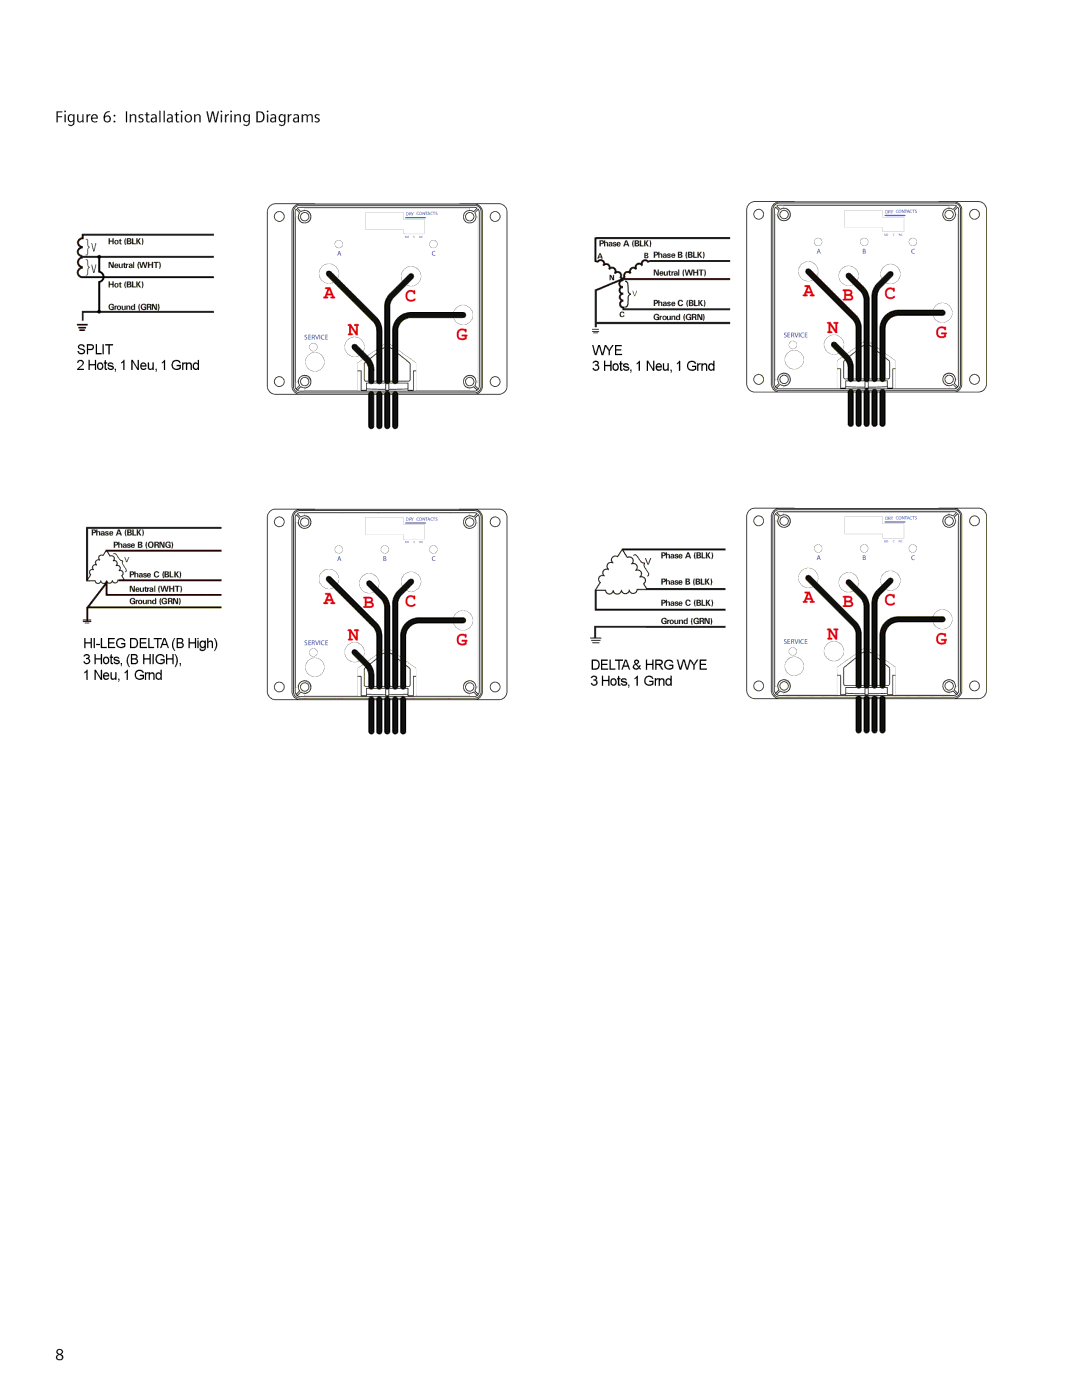 Siemens TPS3 11 user manual Installation Wiring Diagrams 